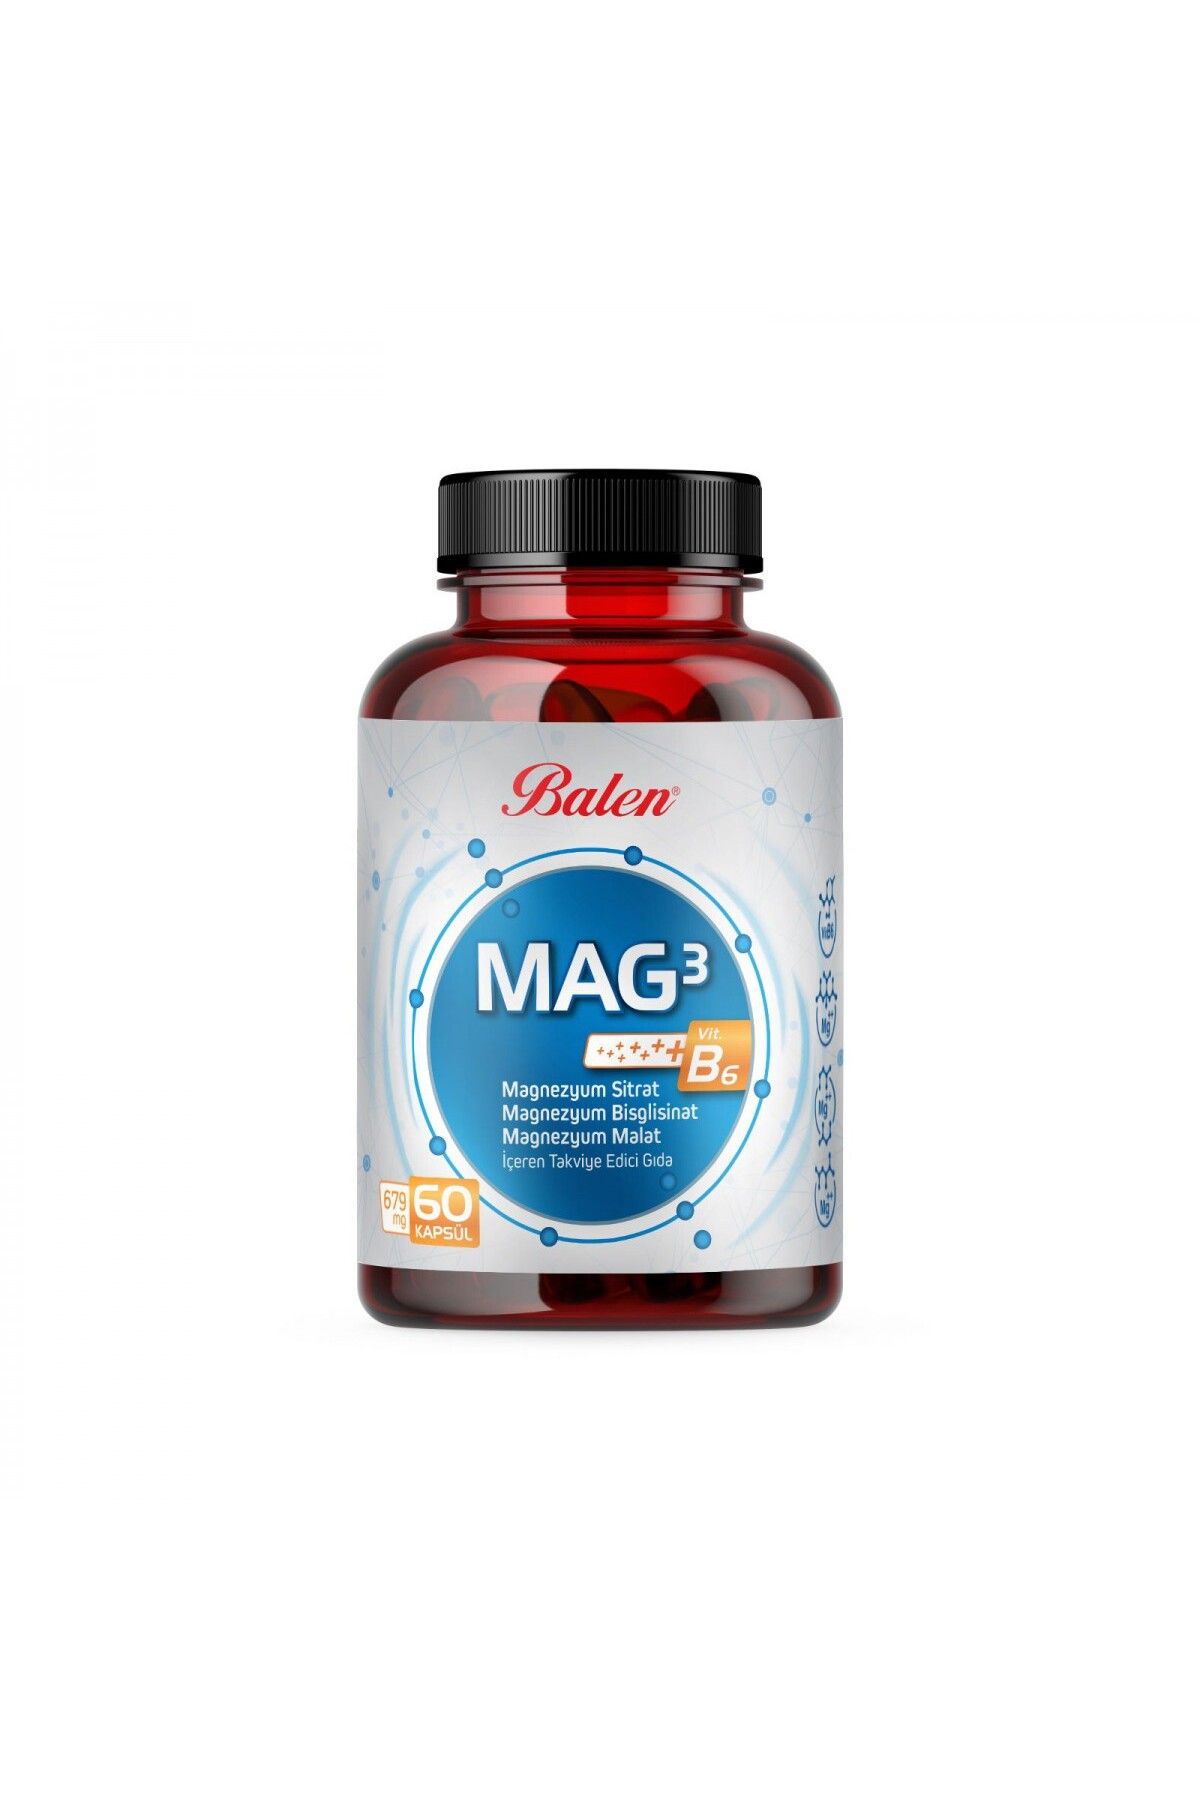 Balen Mag 3 Magnezyum Sitrat & Bisglisinat & Malat 679 Mg *60 Kapsül